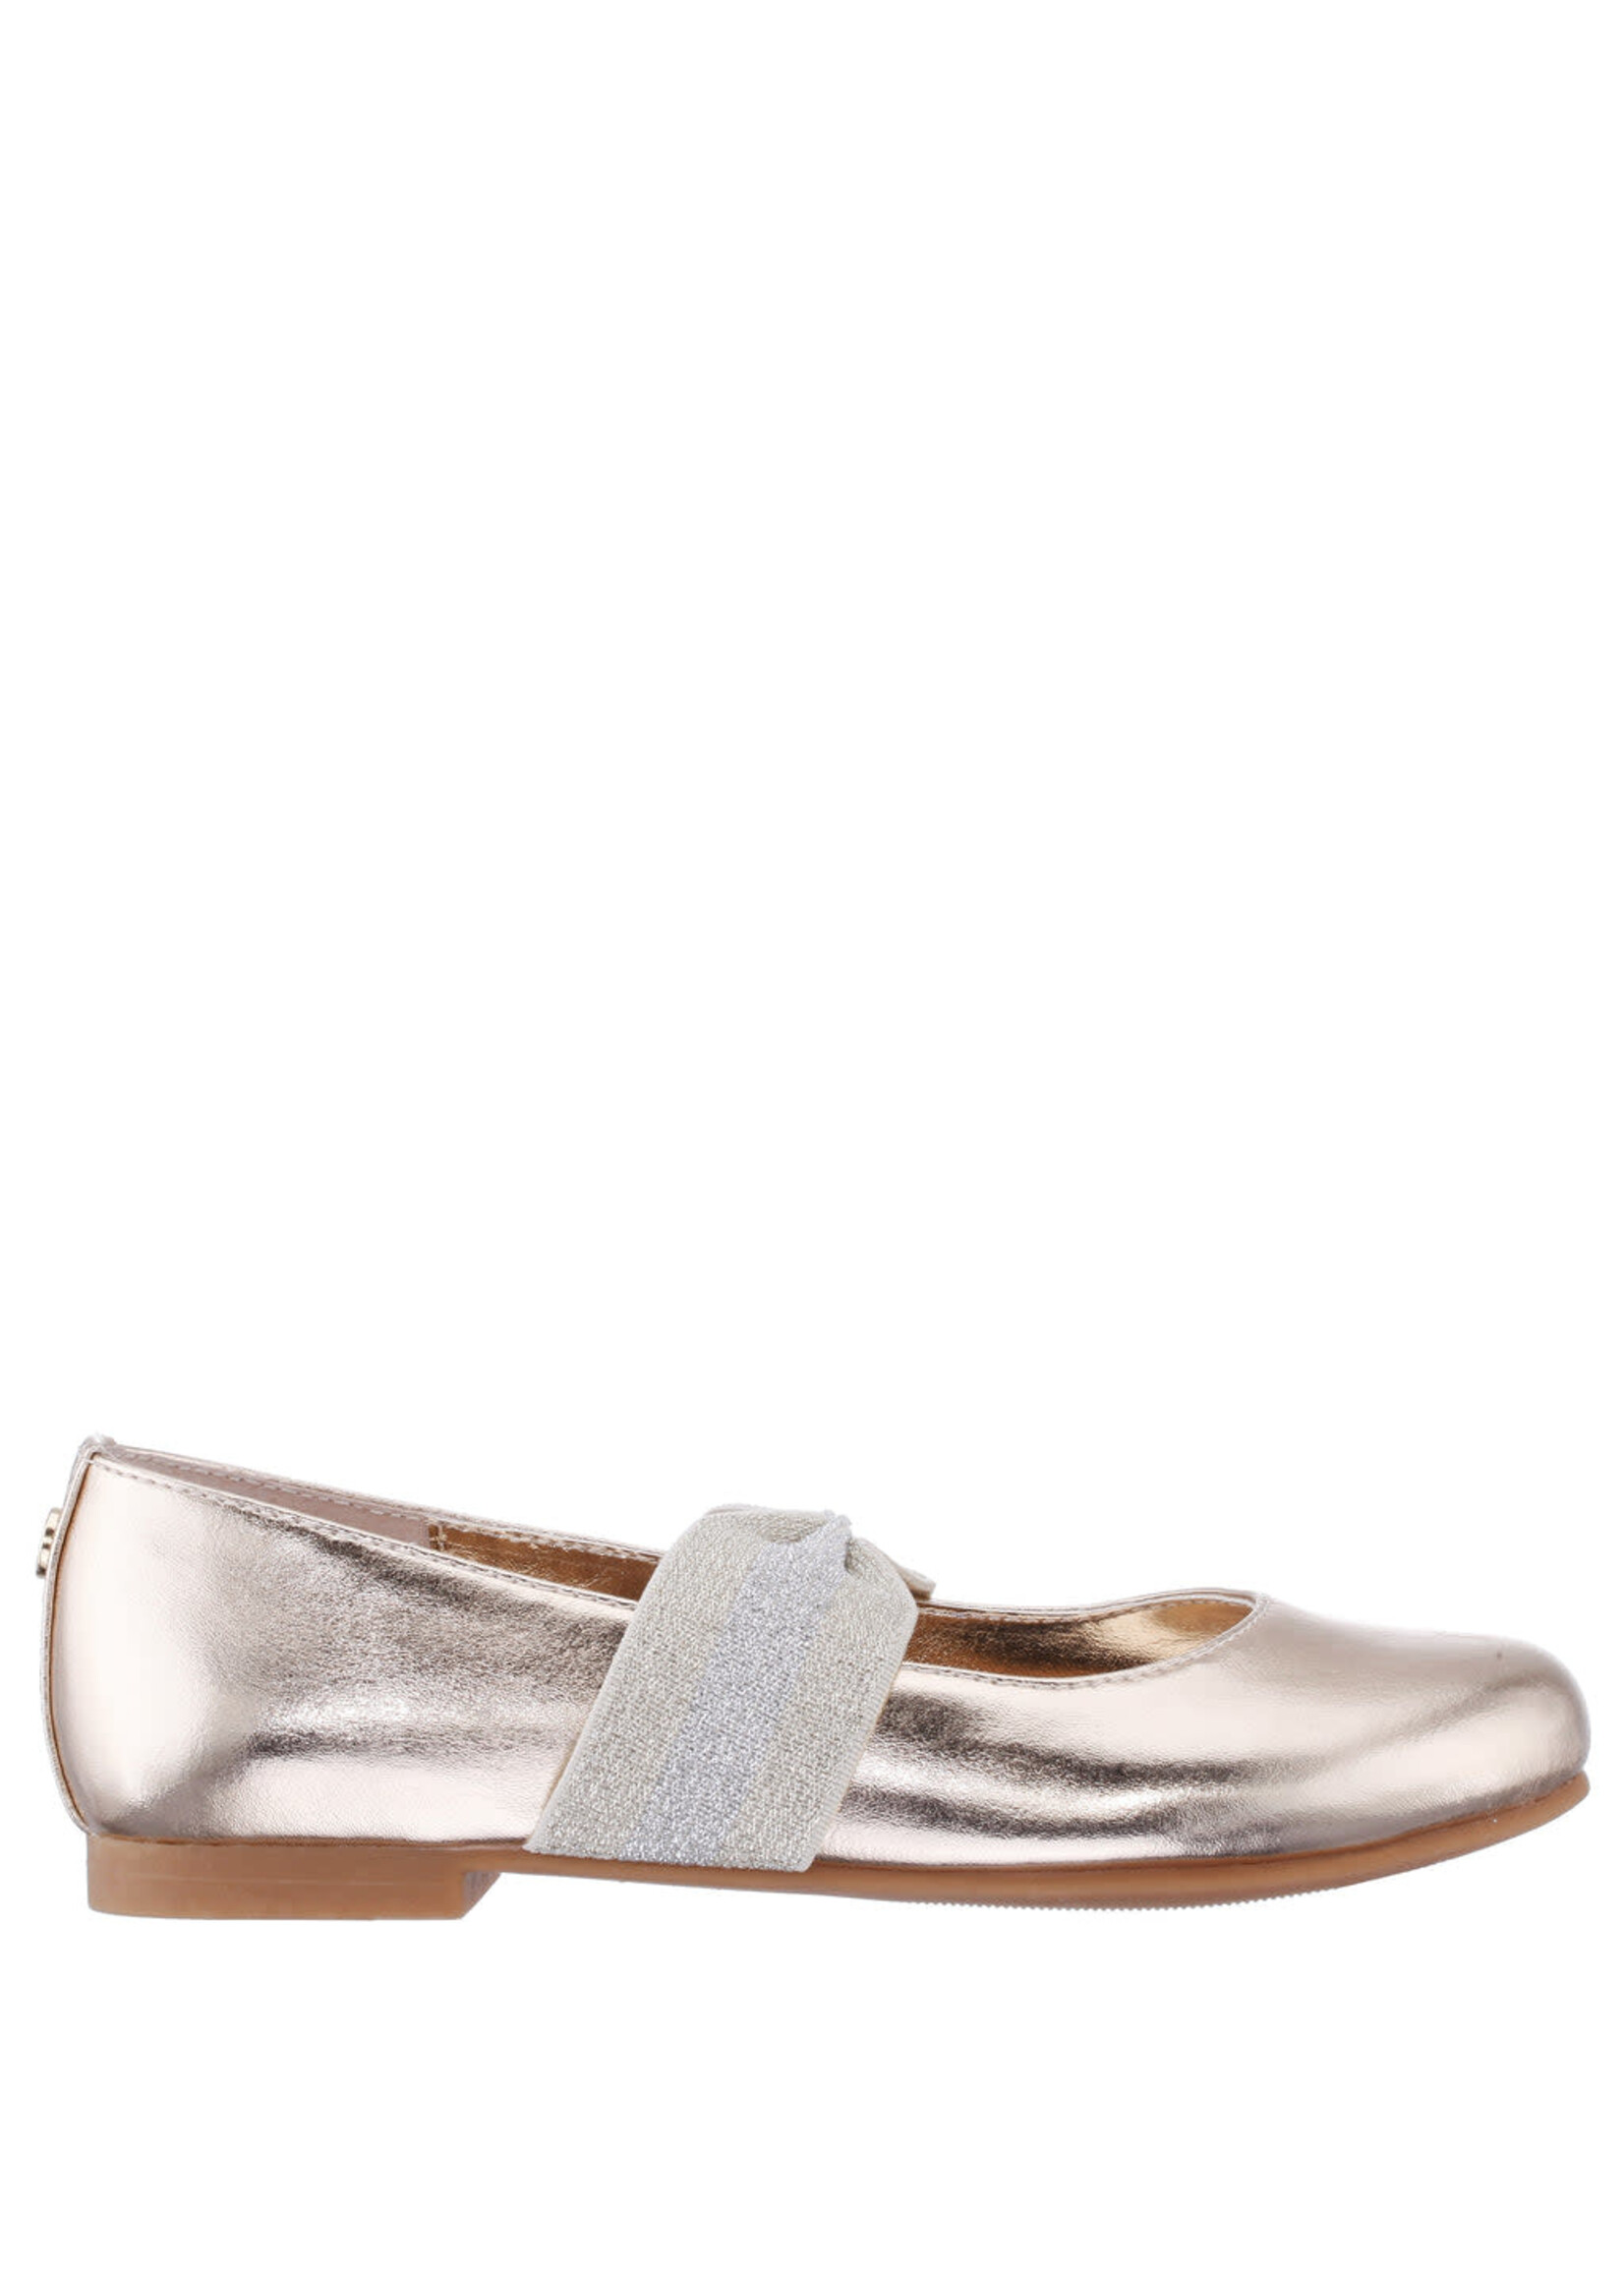 Nina Footwear Krissy in Gold Metallic Ballet Flat for Tweens By Nina Footwear